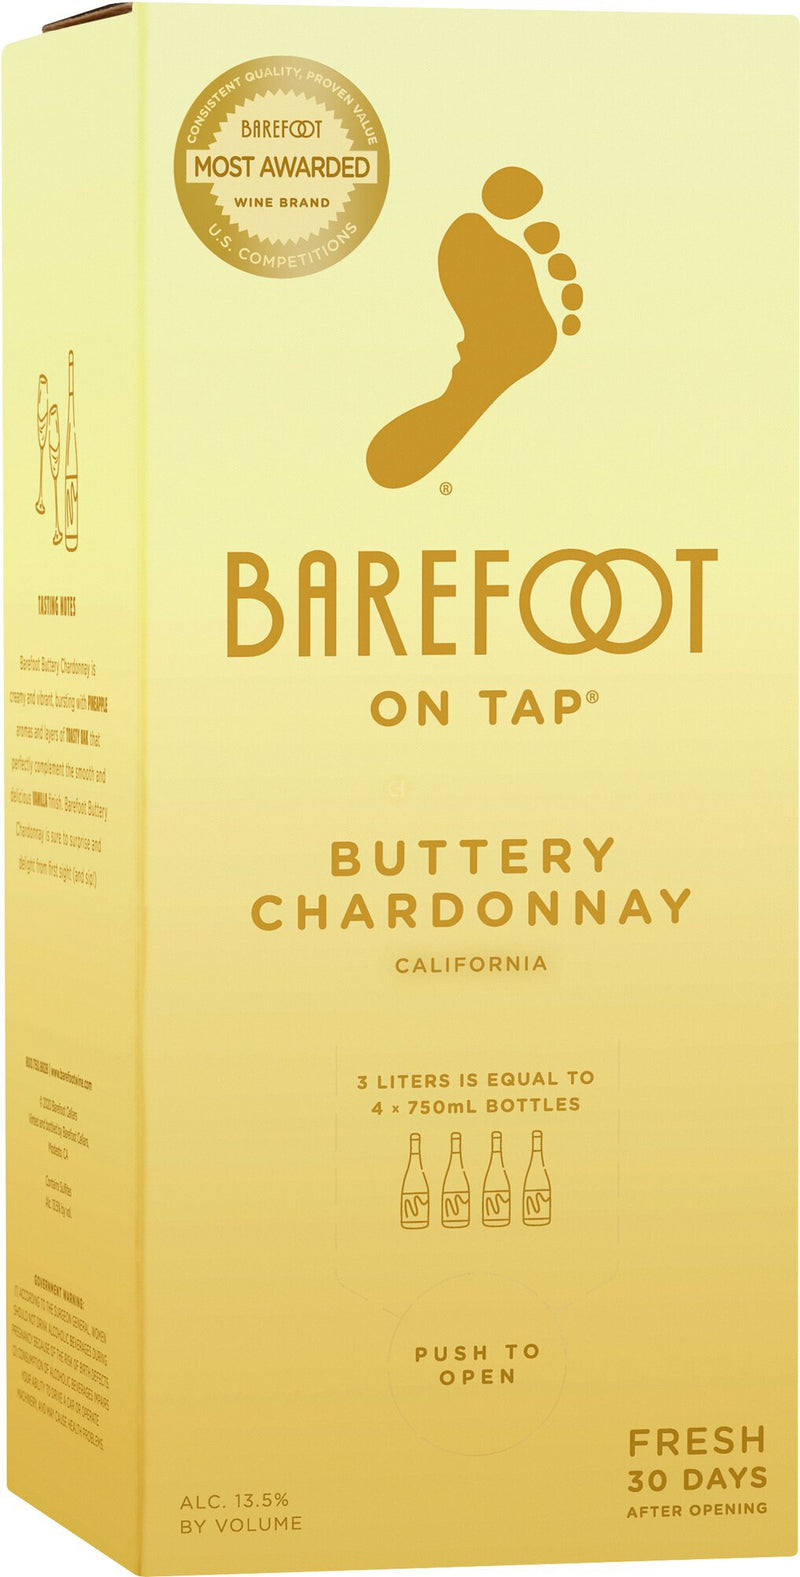 Barefoot Buttery Chardonnay 750 ml